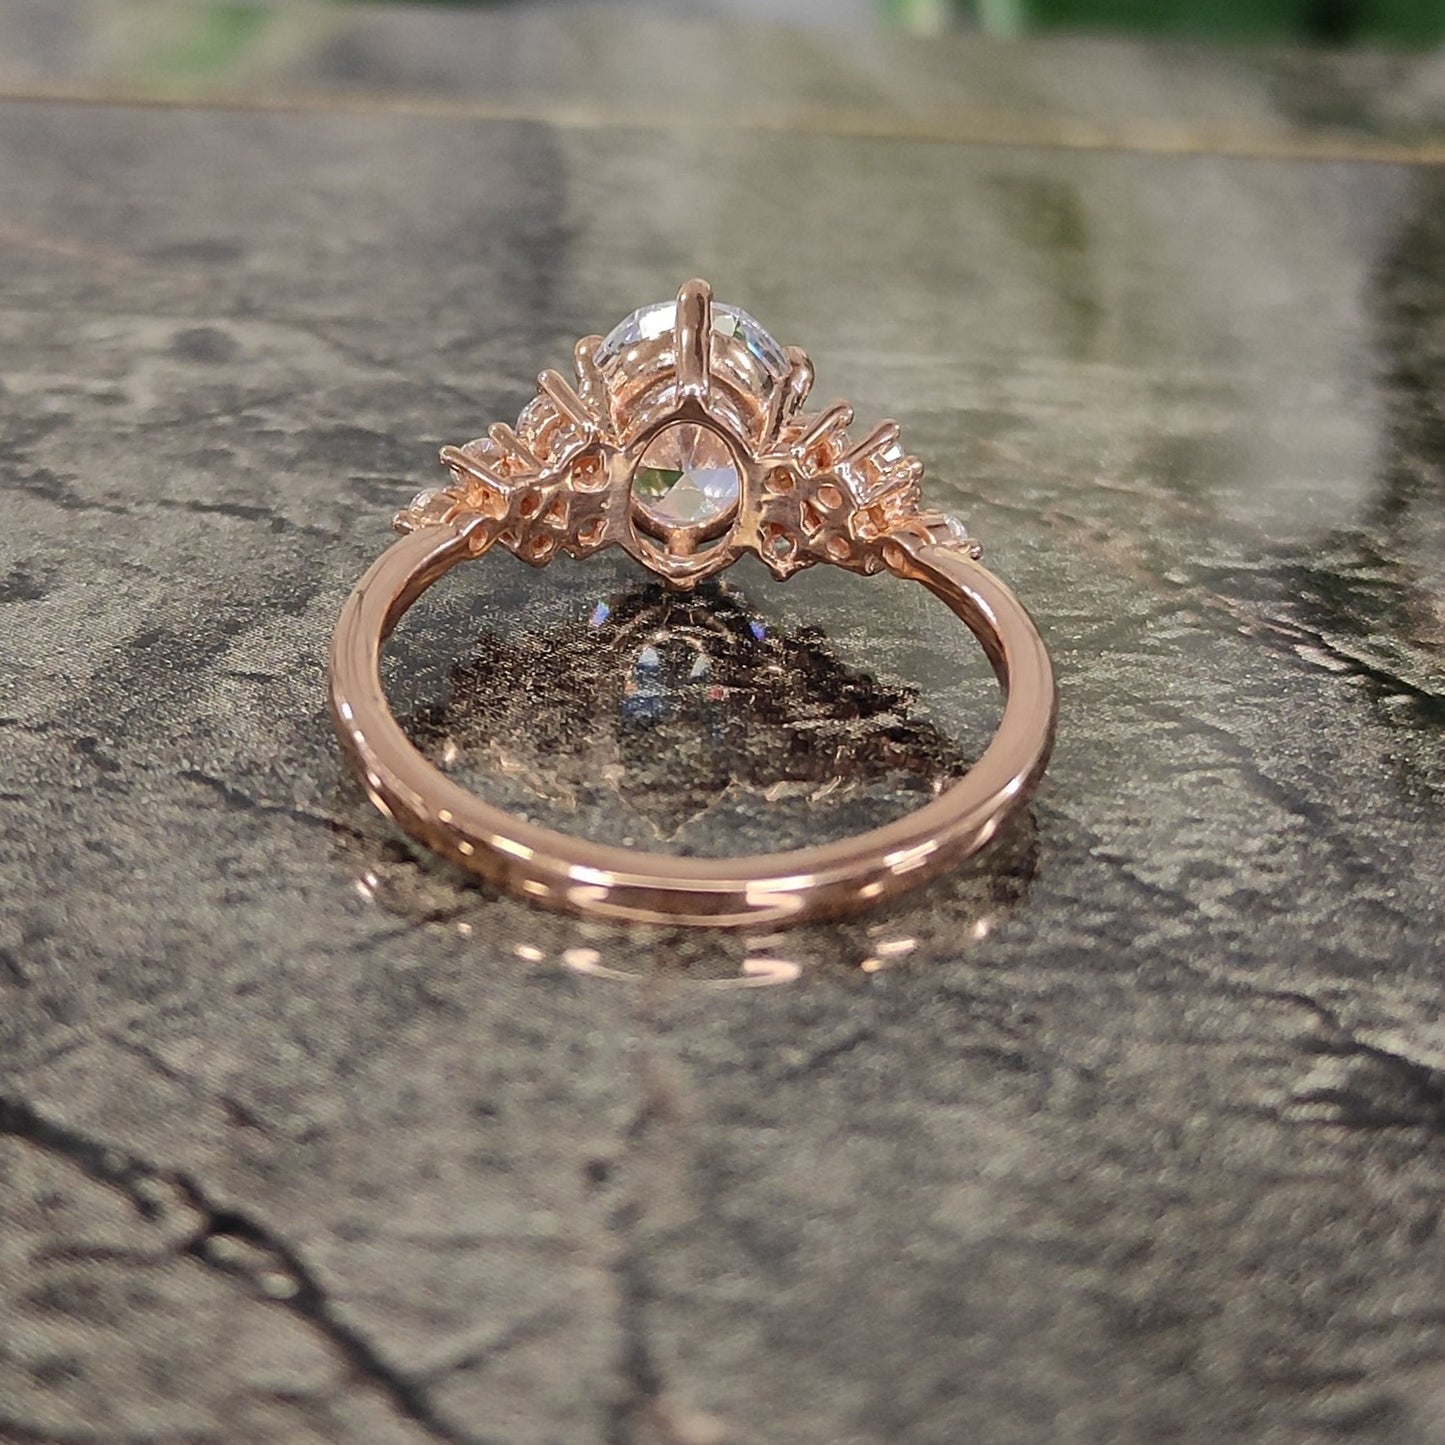 White Diamond Wedding Engagement Ring